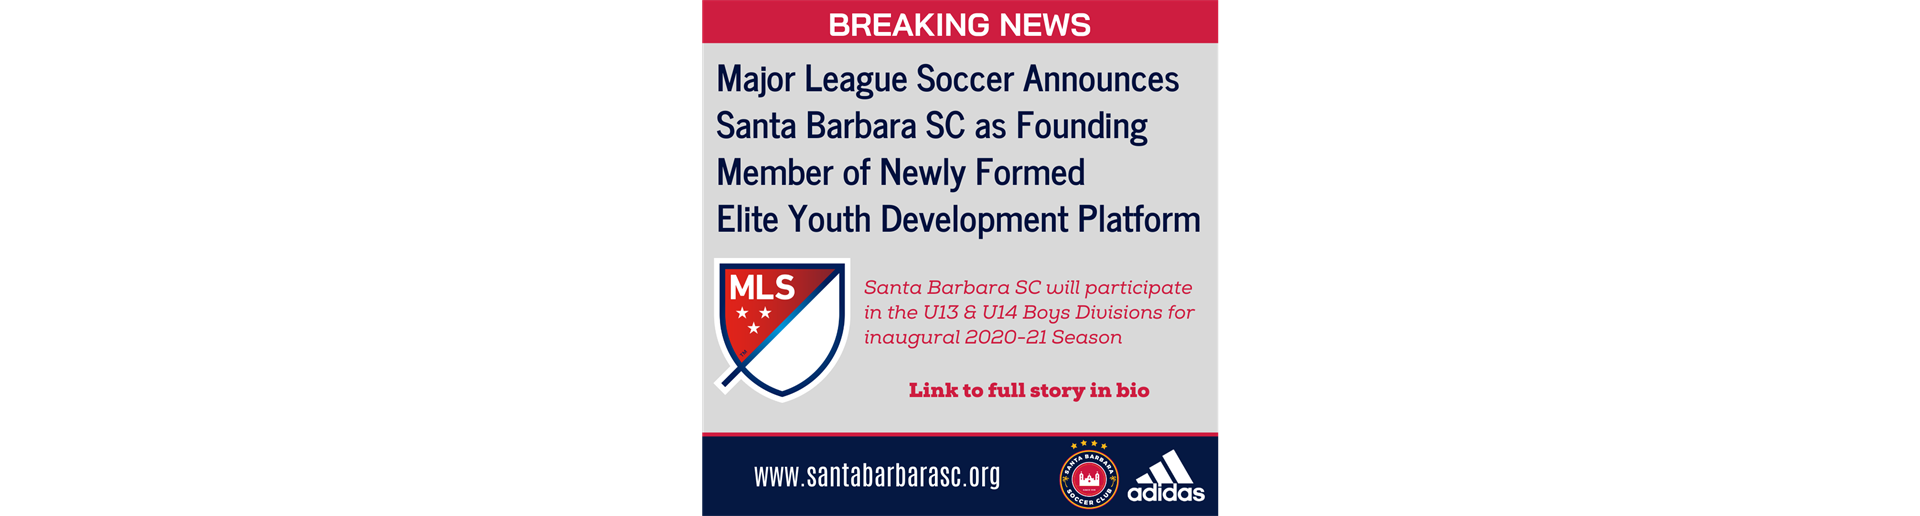 MLS Announcement